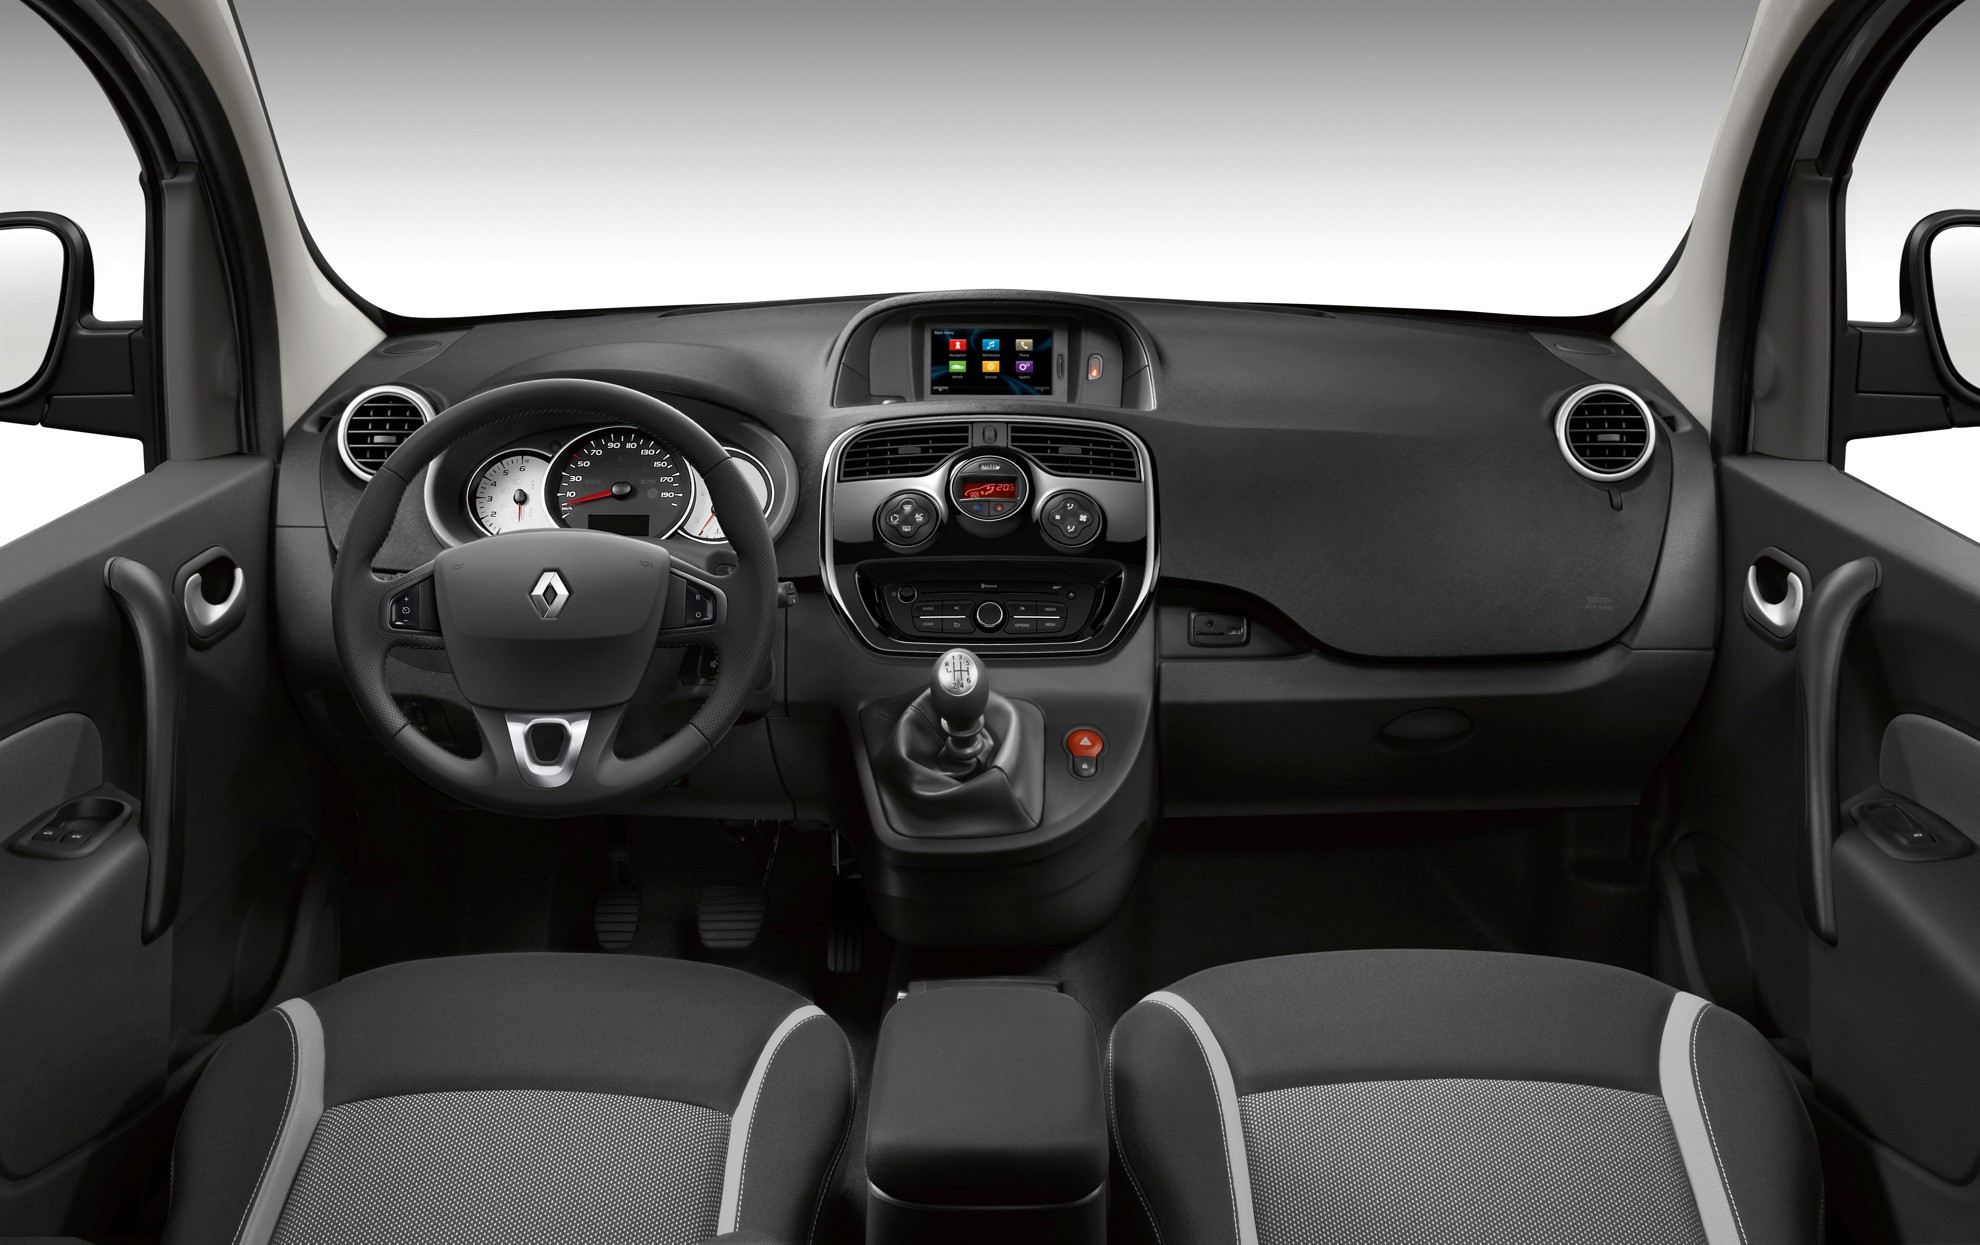 Geneva Motor Show 2013 – New Renault Kangoo